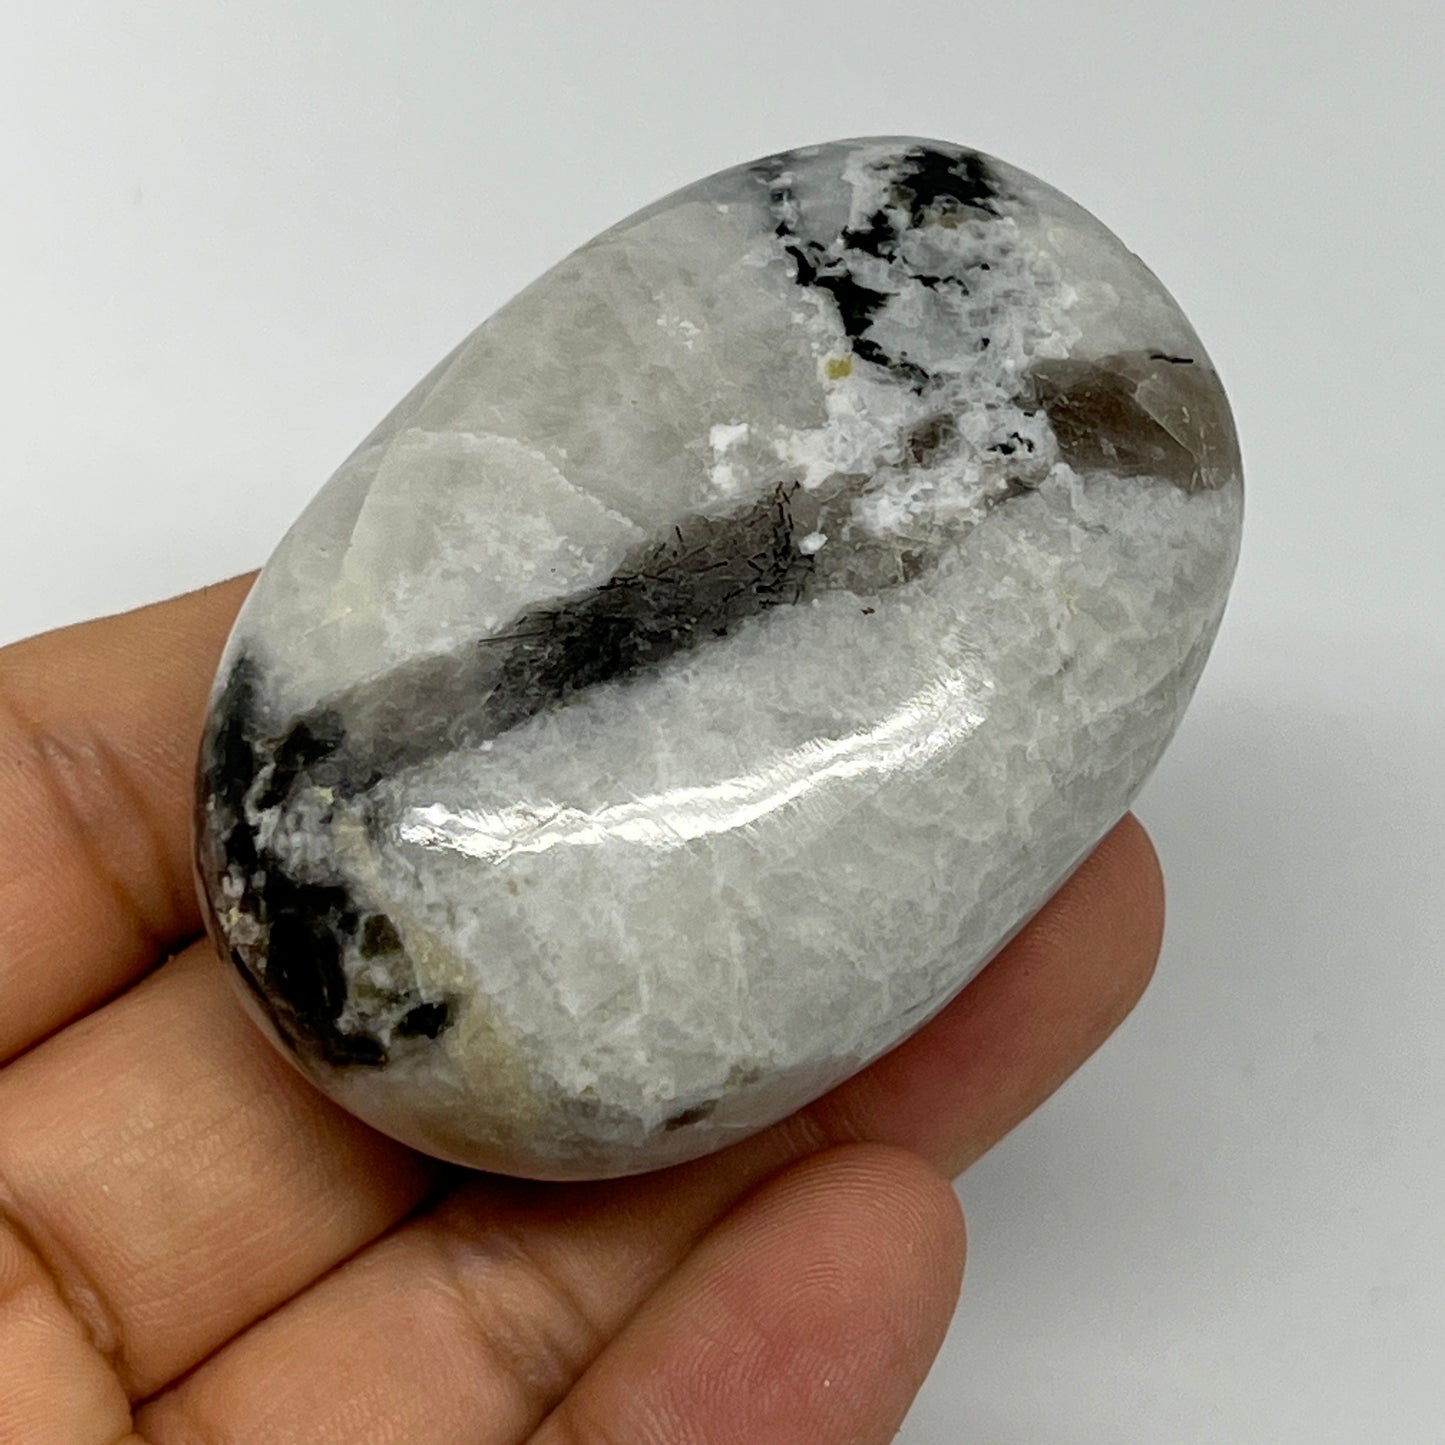 98.6g,2.4"x1.7"x1", Rainbow Moonstone Palm-Stone Polished from India, B21313